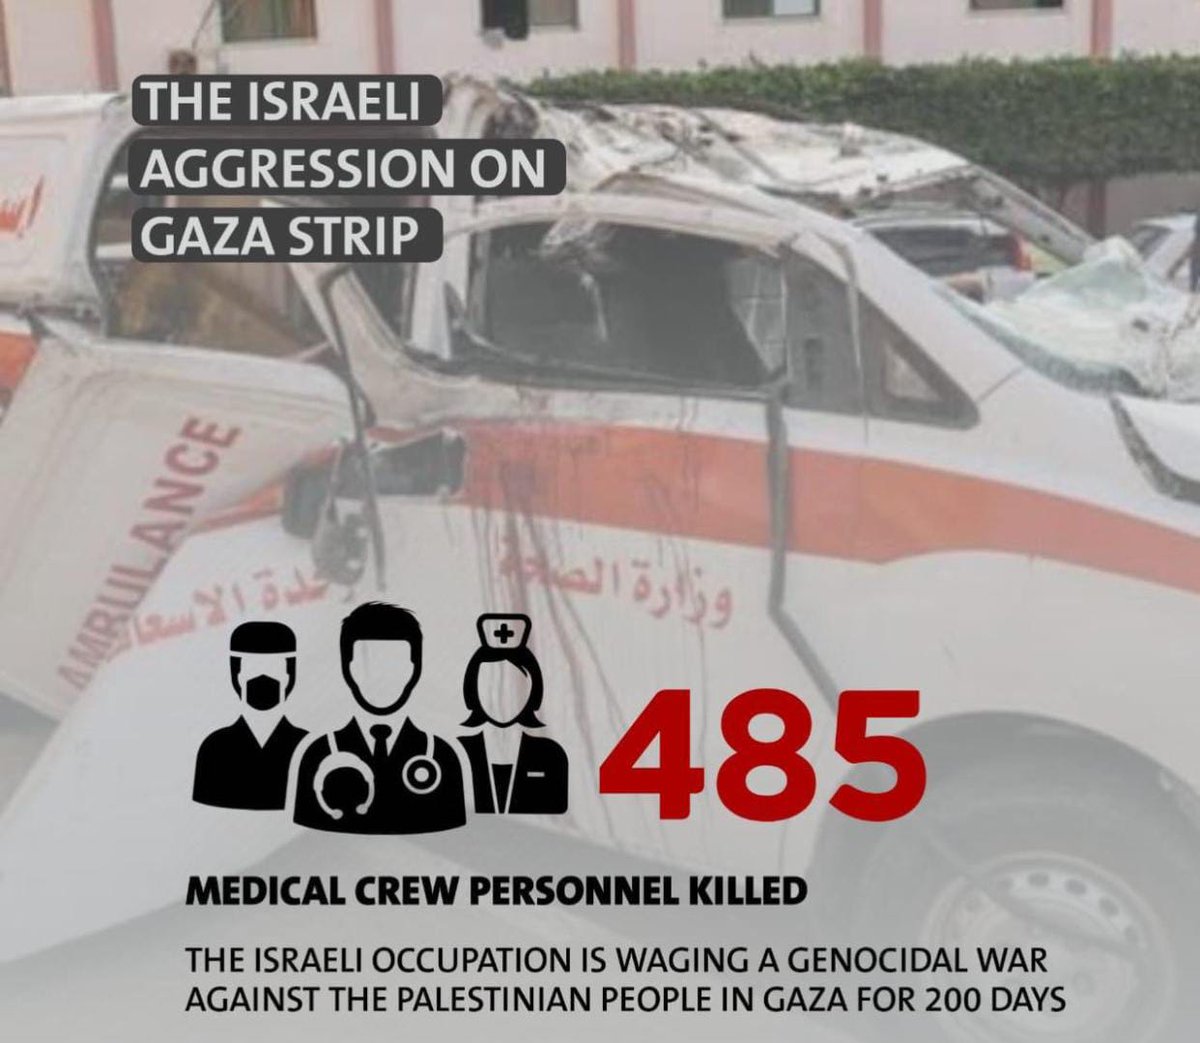 #200DaysOfGenocide
THE ISRAELI 
AGGRESSION
GAZA STRIP